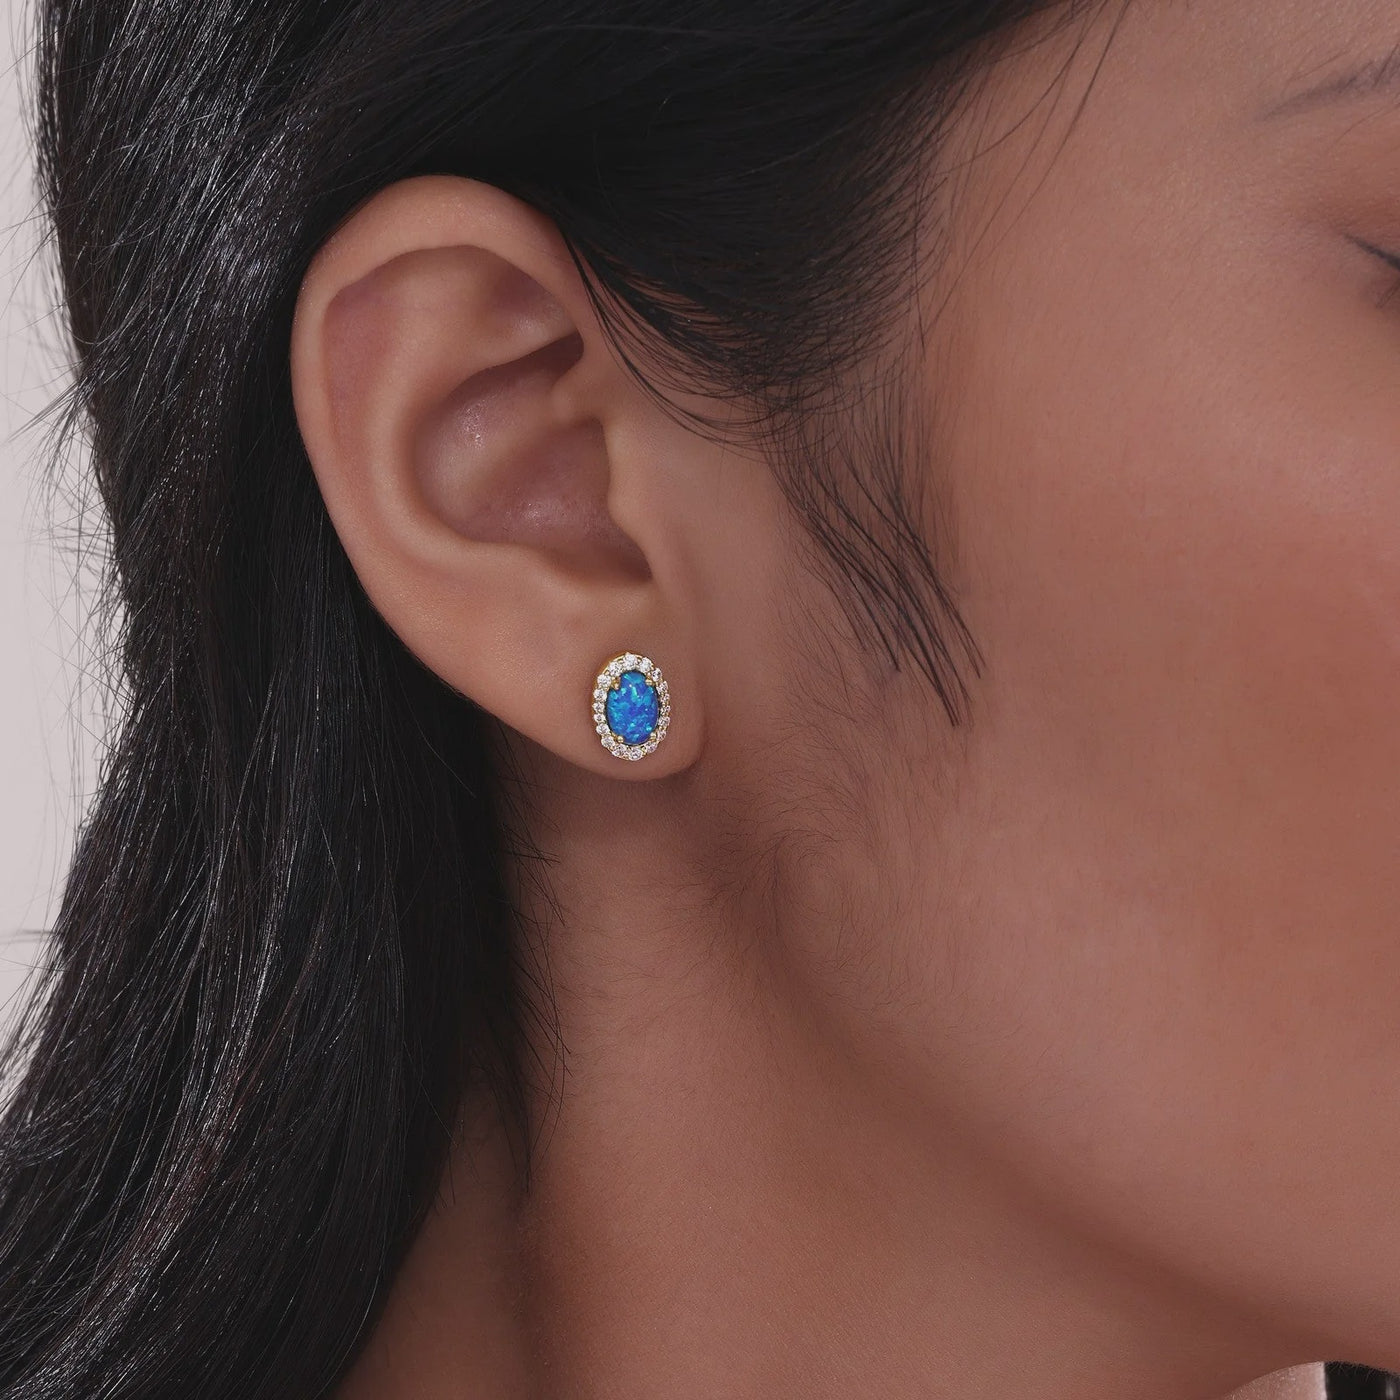 Vintage Inspired Blue Opal Halo Earrings